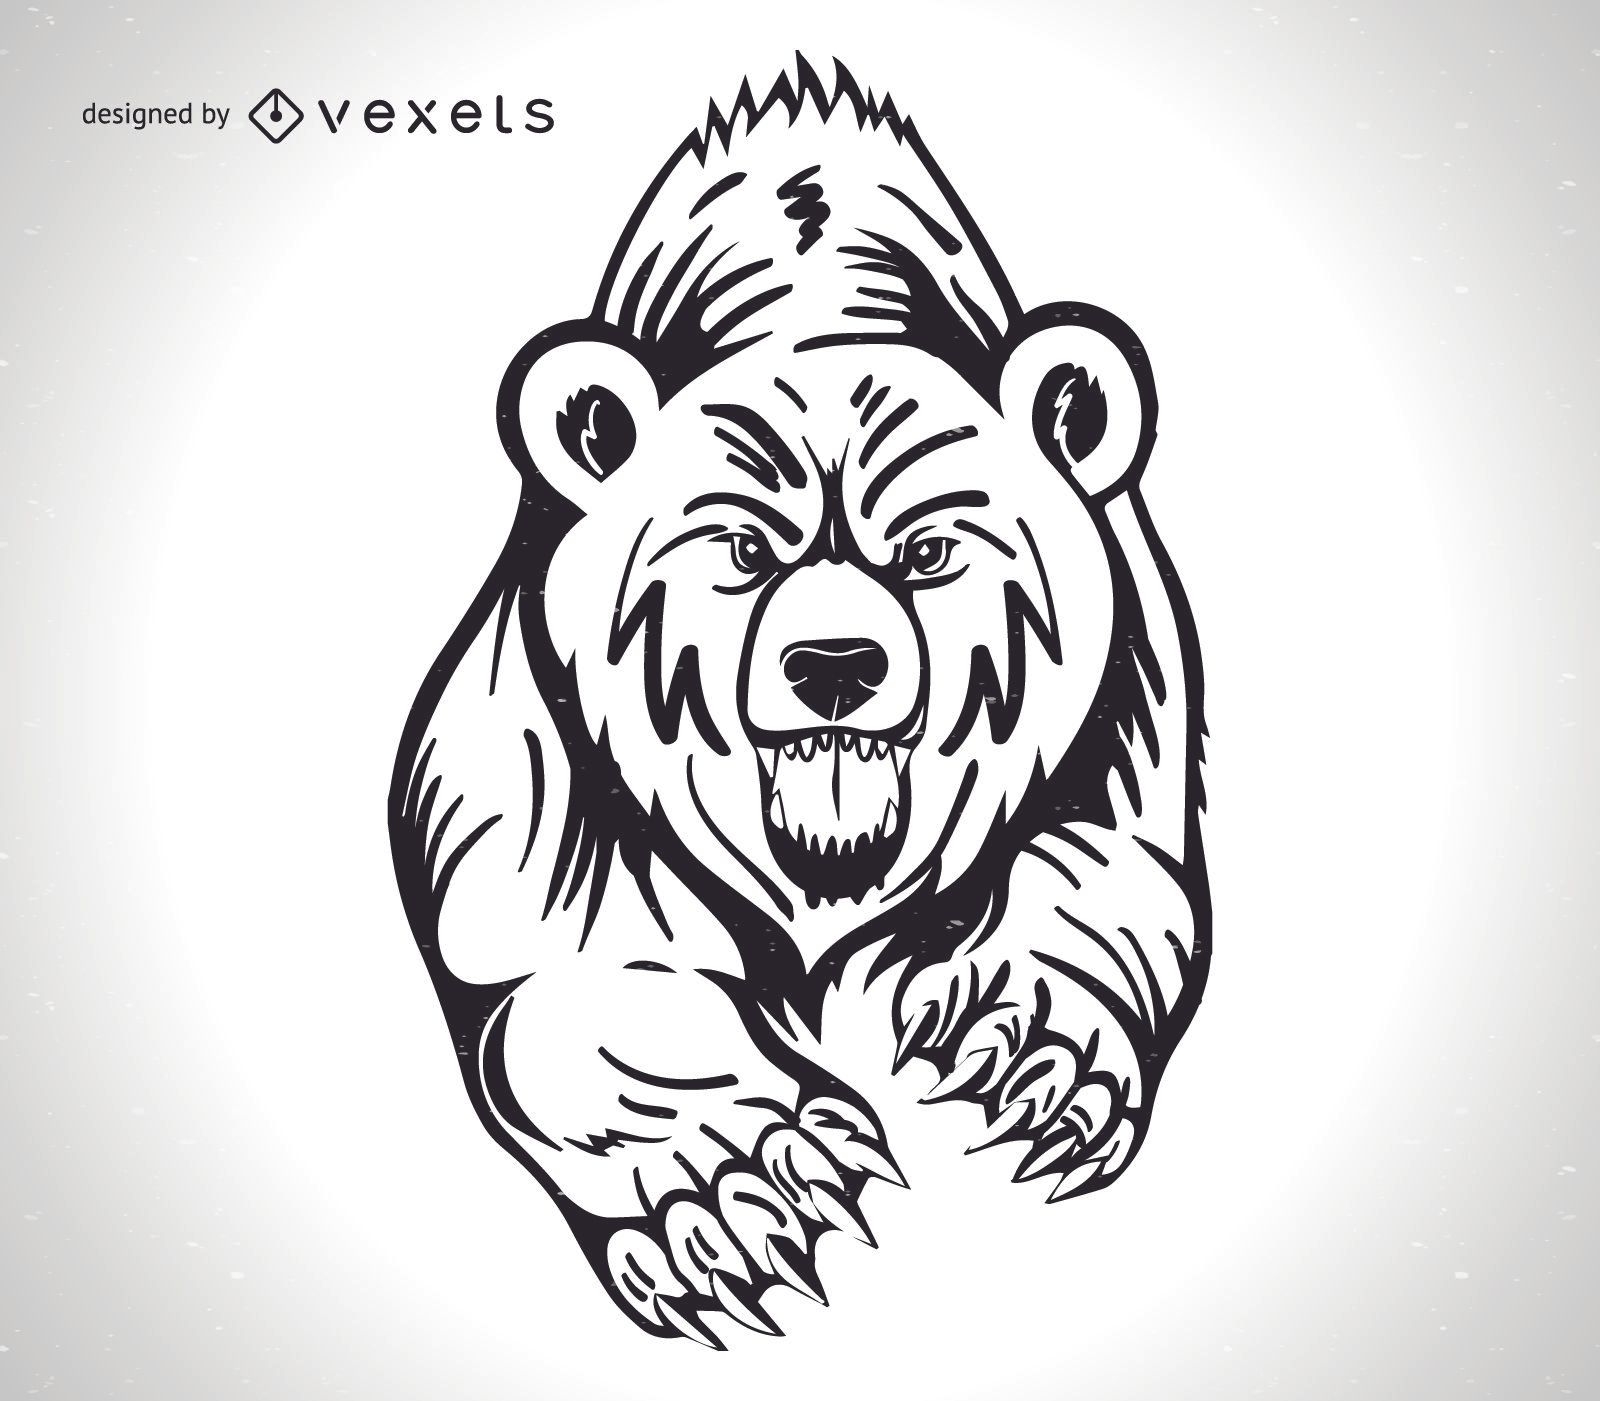 Diseño de oso grizzly enojado